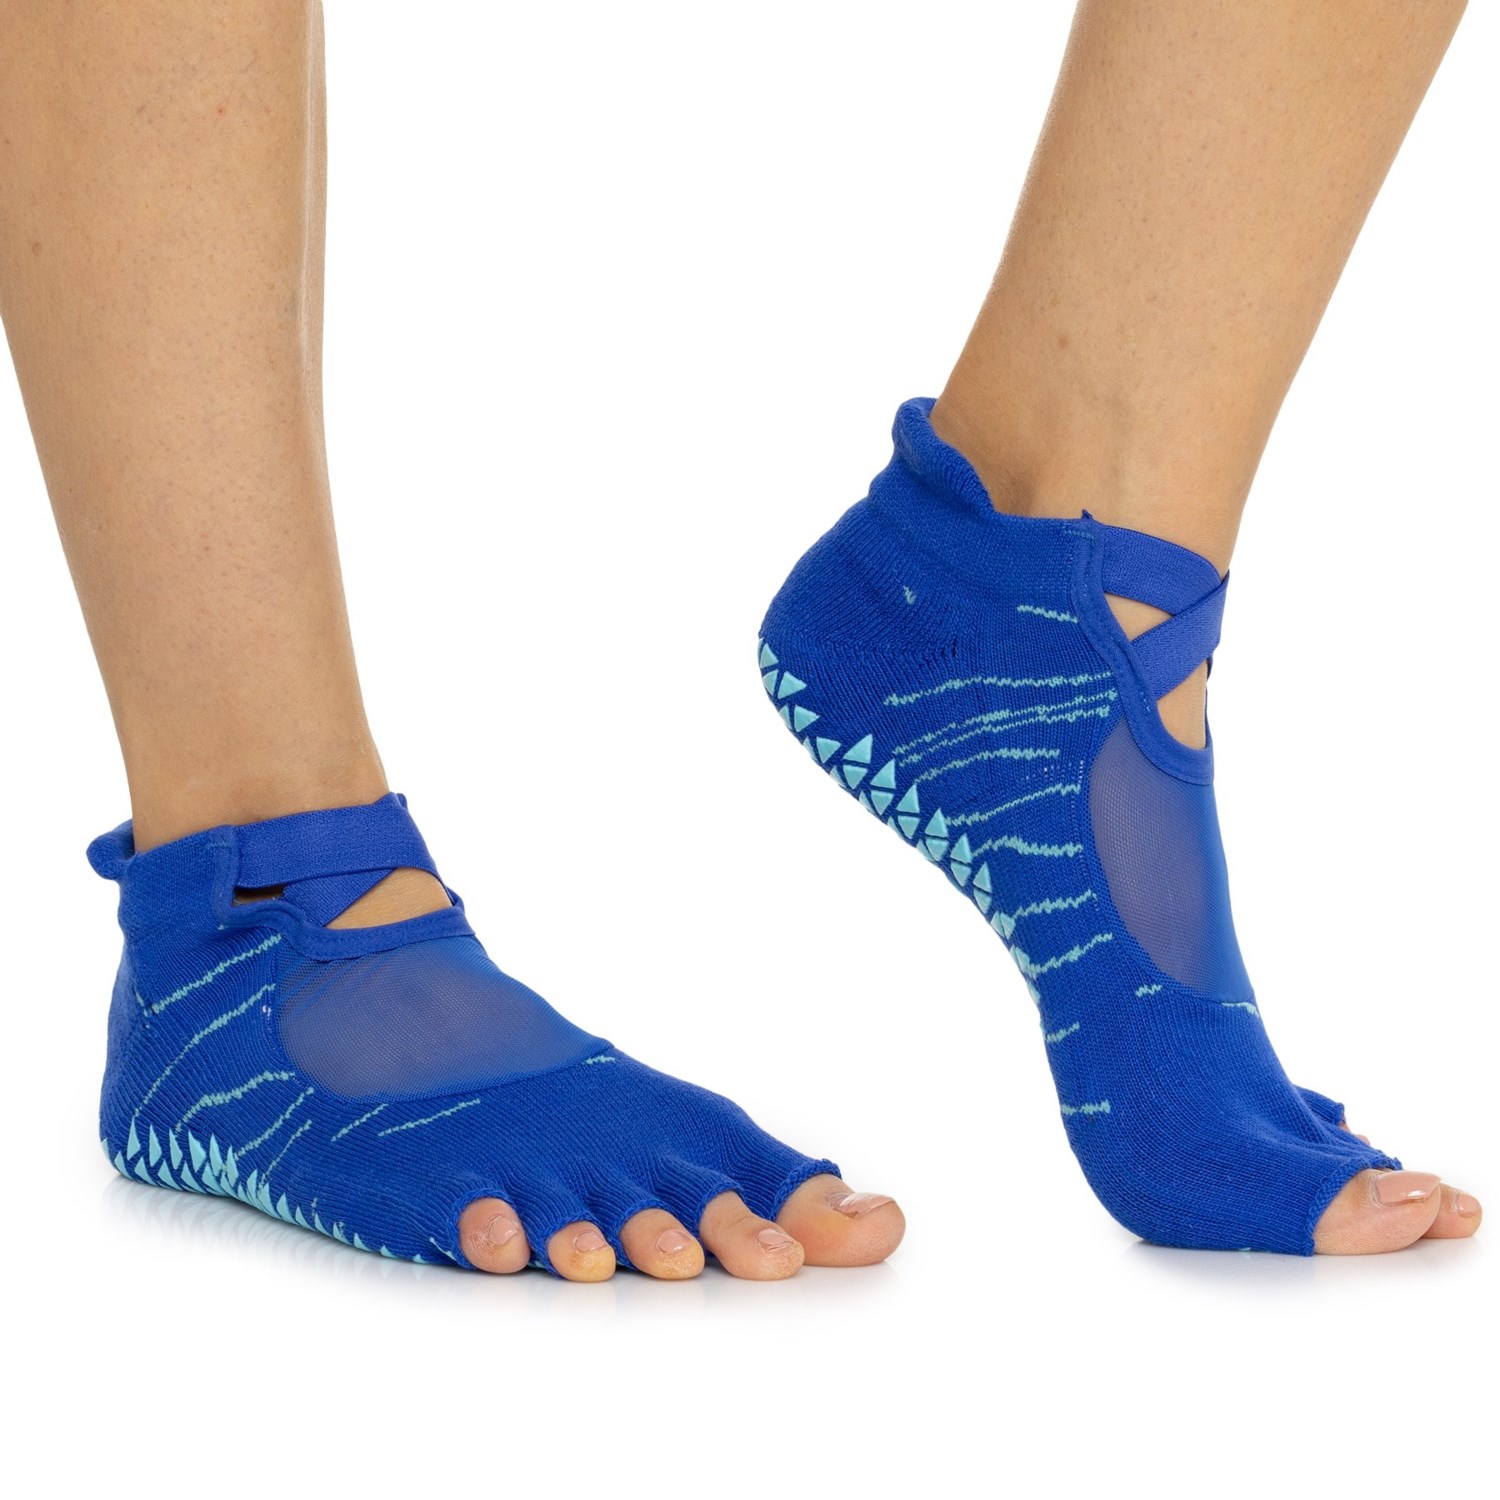 Pointe Studio Small-Medium - Dunes Toeless Grip Socks (For Women) - Save 41%